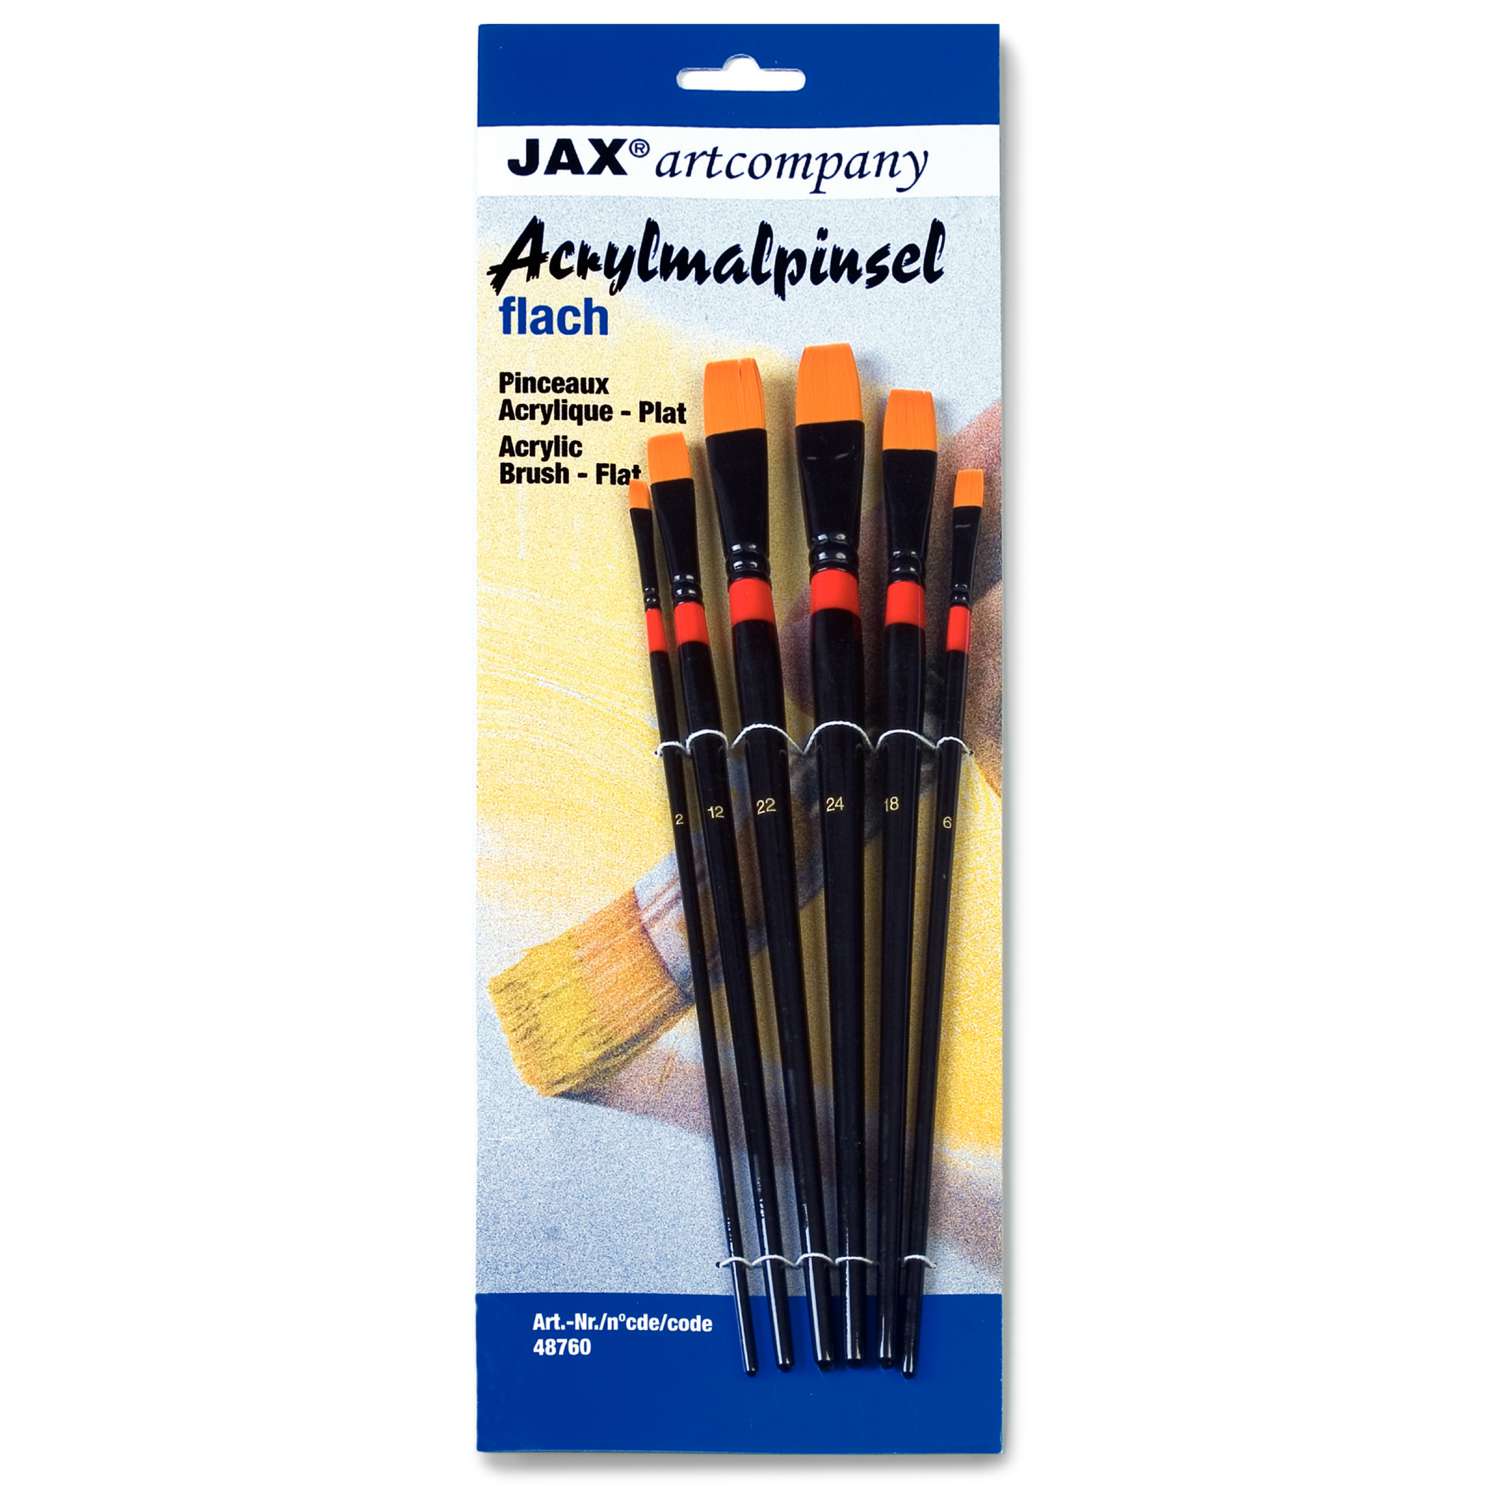 Set de pinceaux acrylique JAX® artcompany, plats